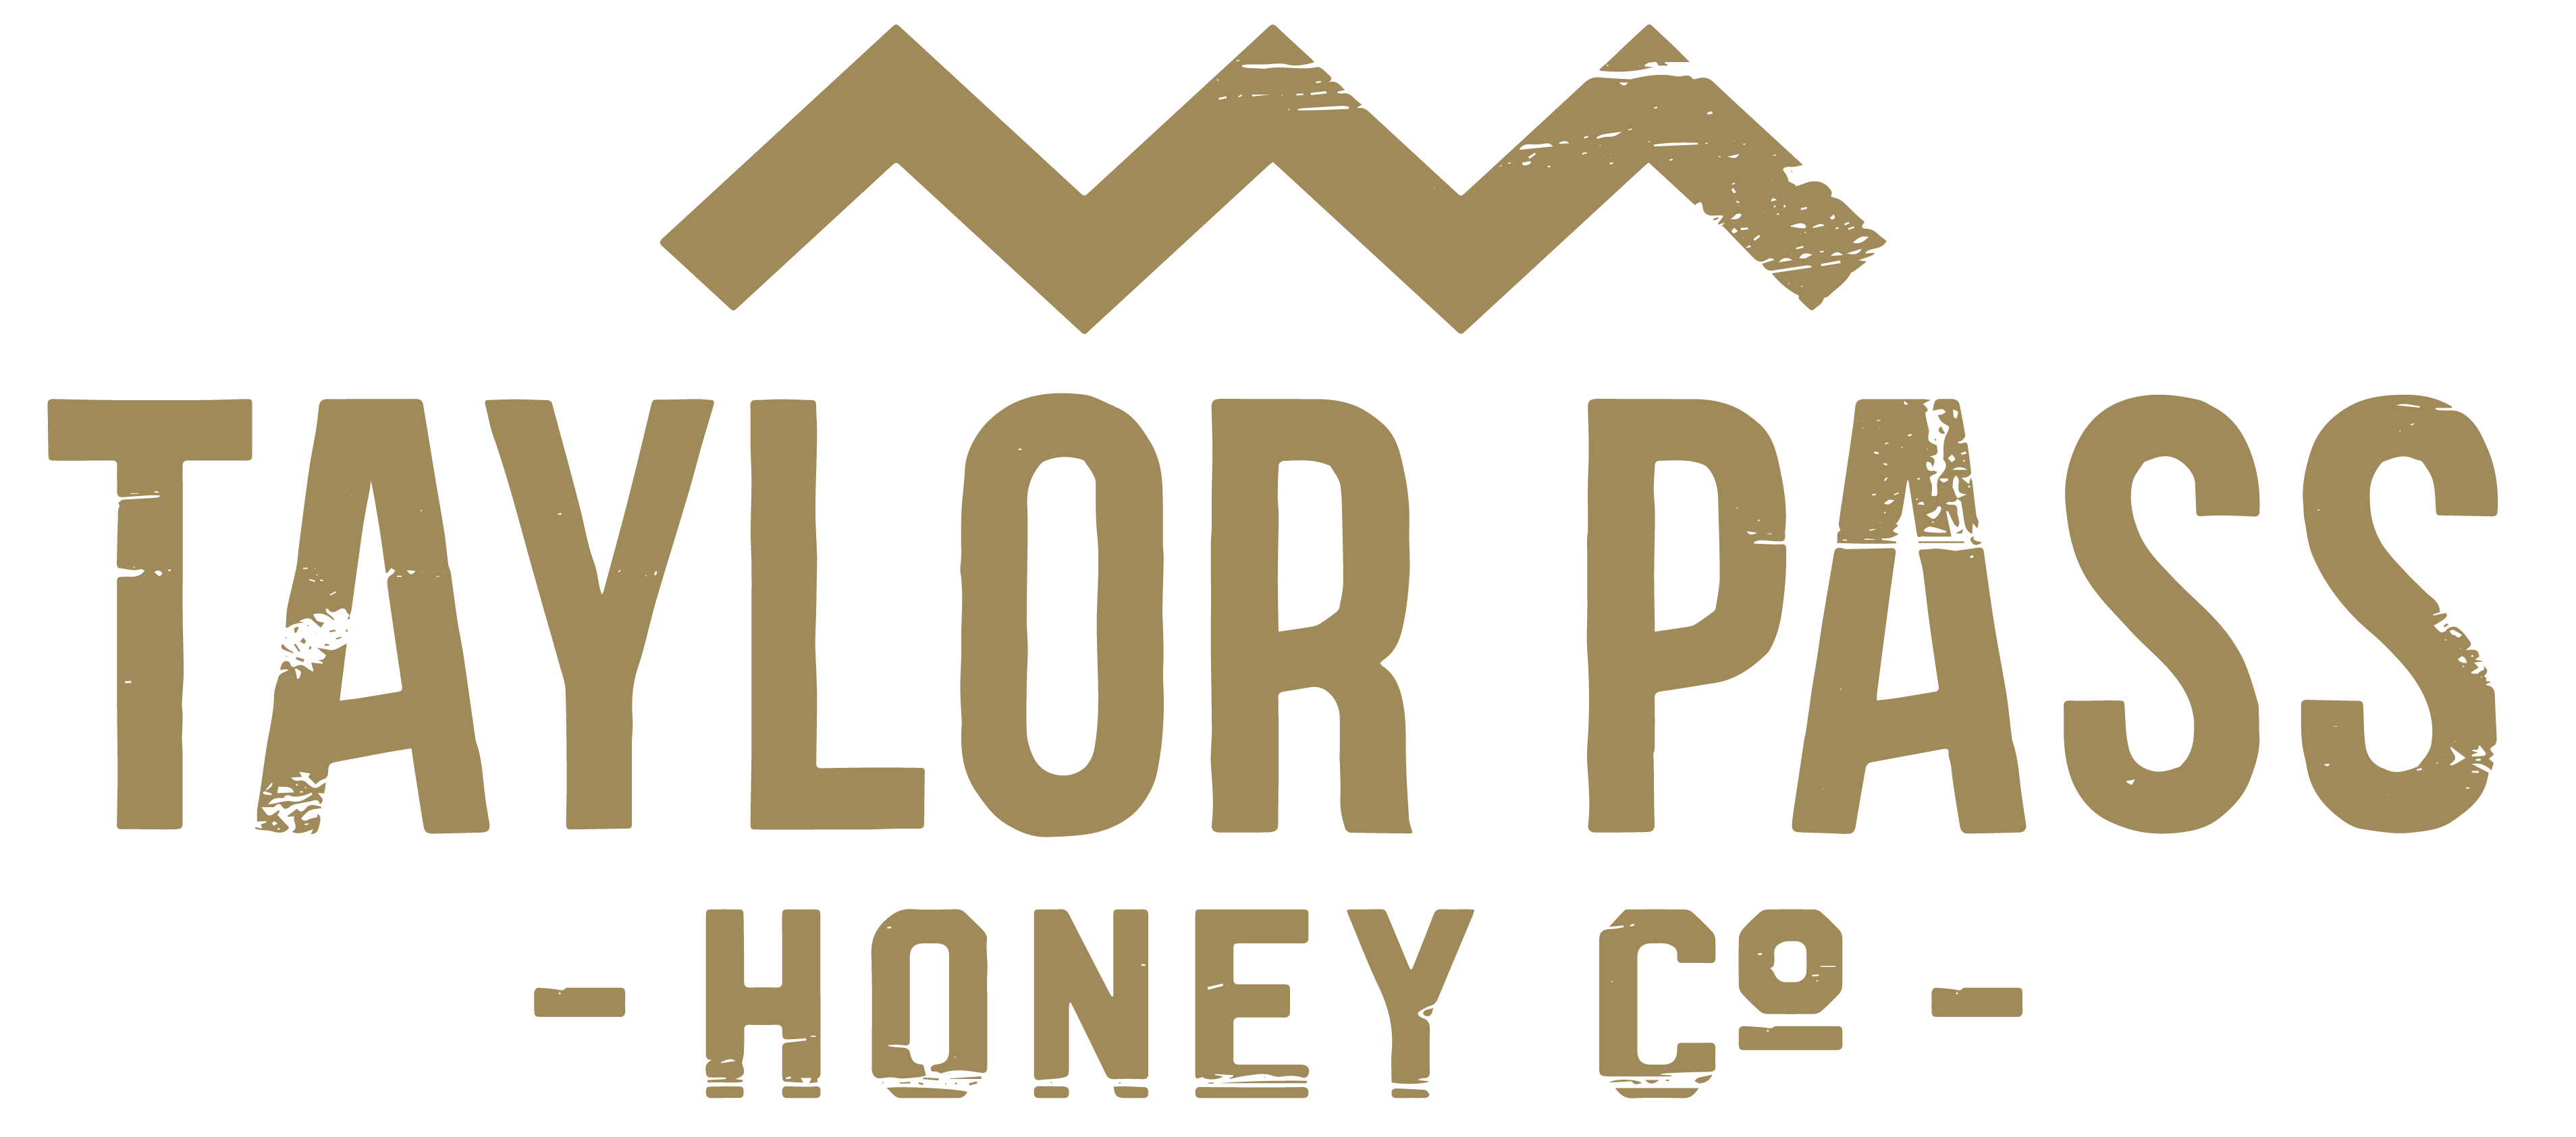 Taylor Pass Honey Co USA